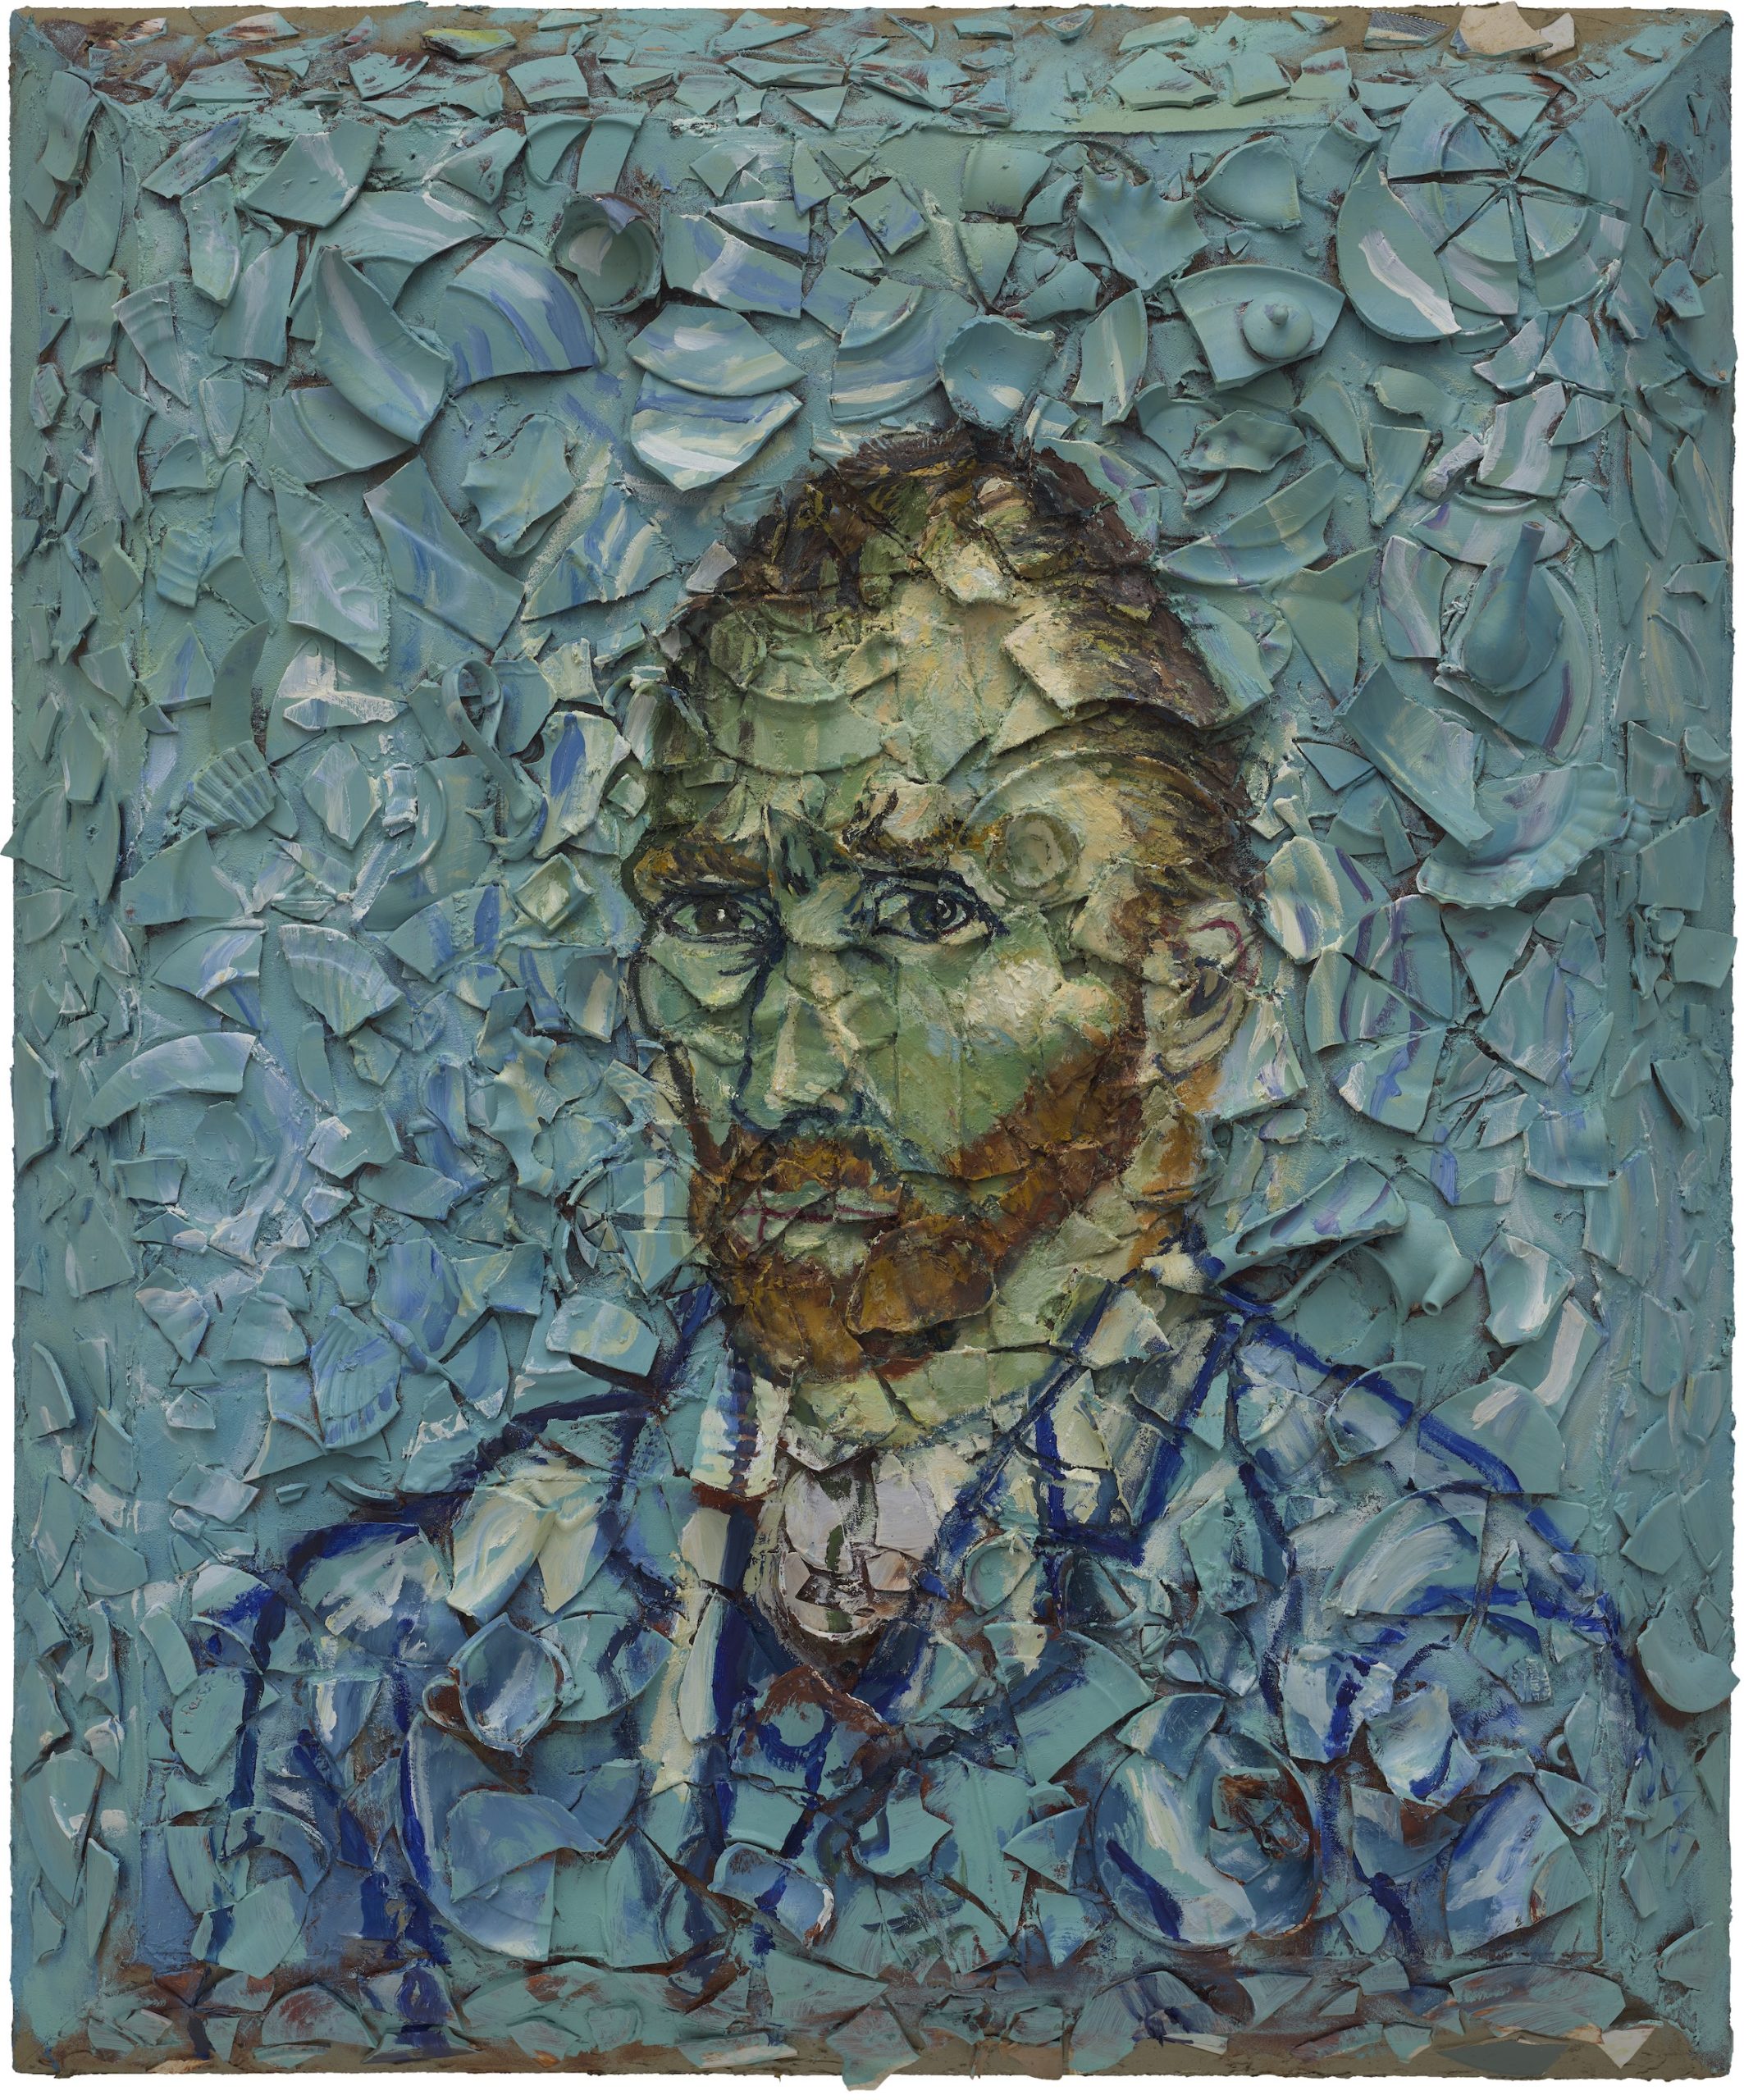 Number 4 (Van Gogh Self-Portrait Musee d'Orsay, Vincent), 2019
